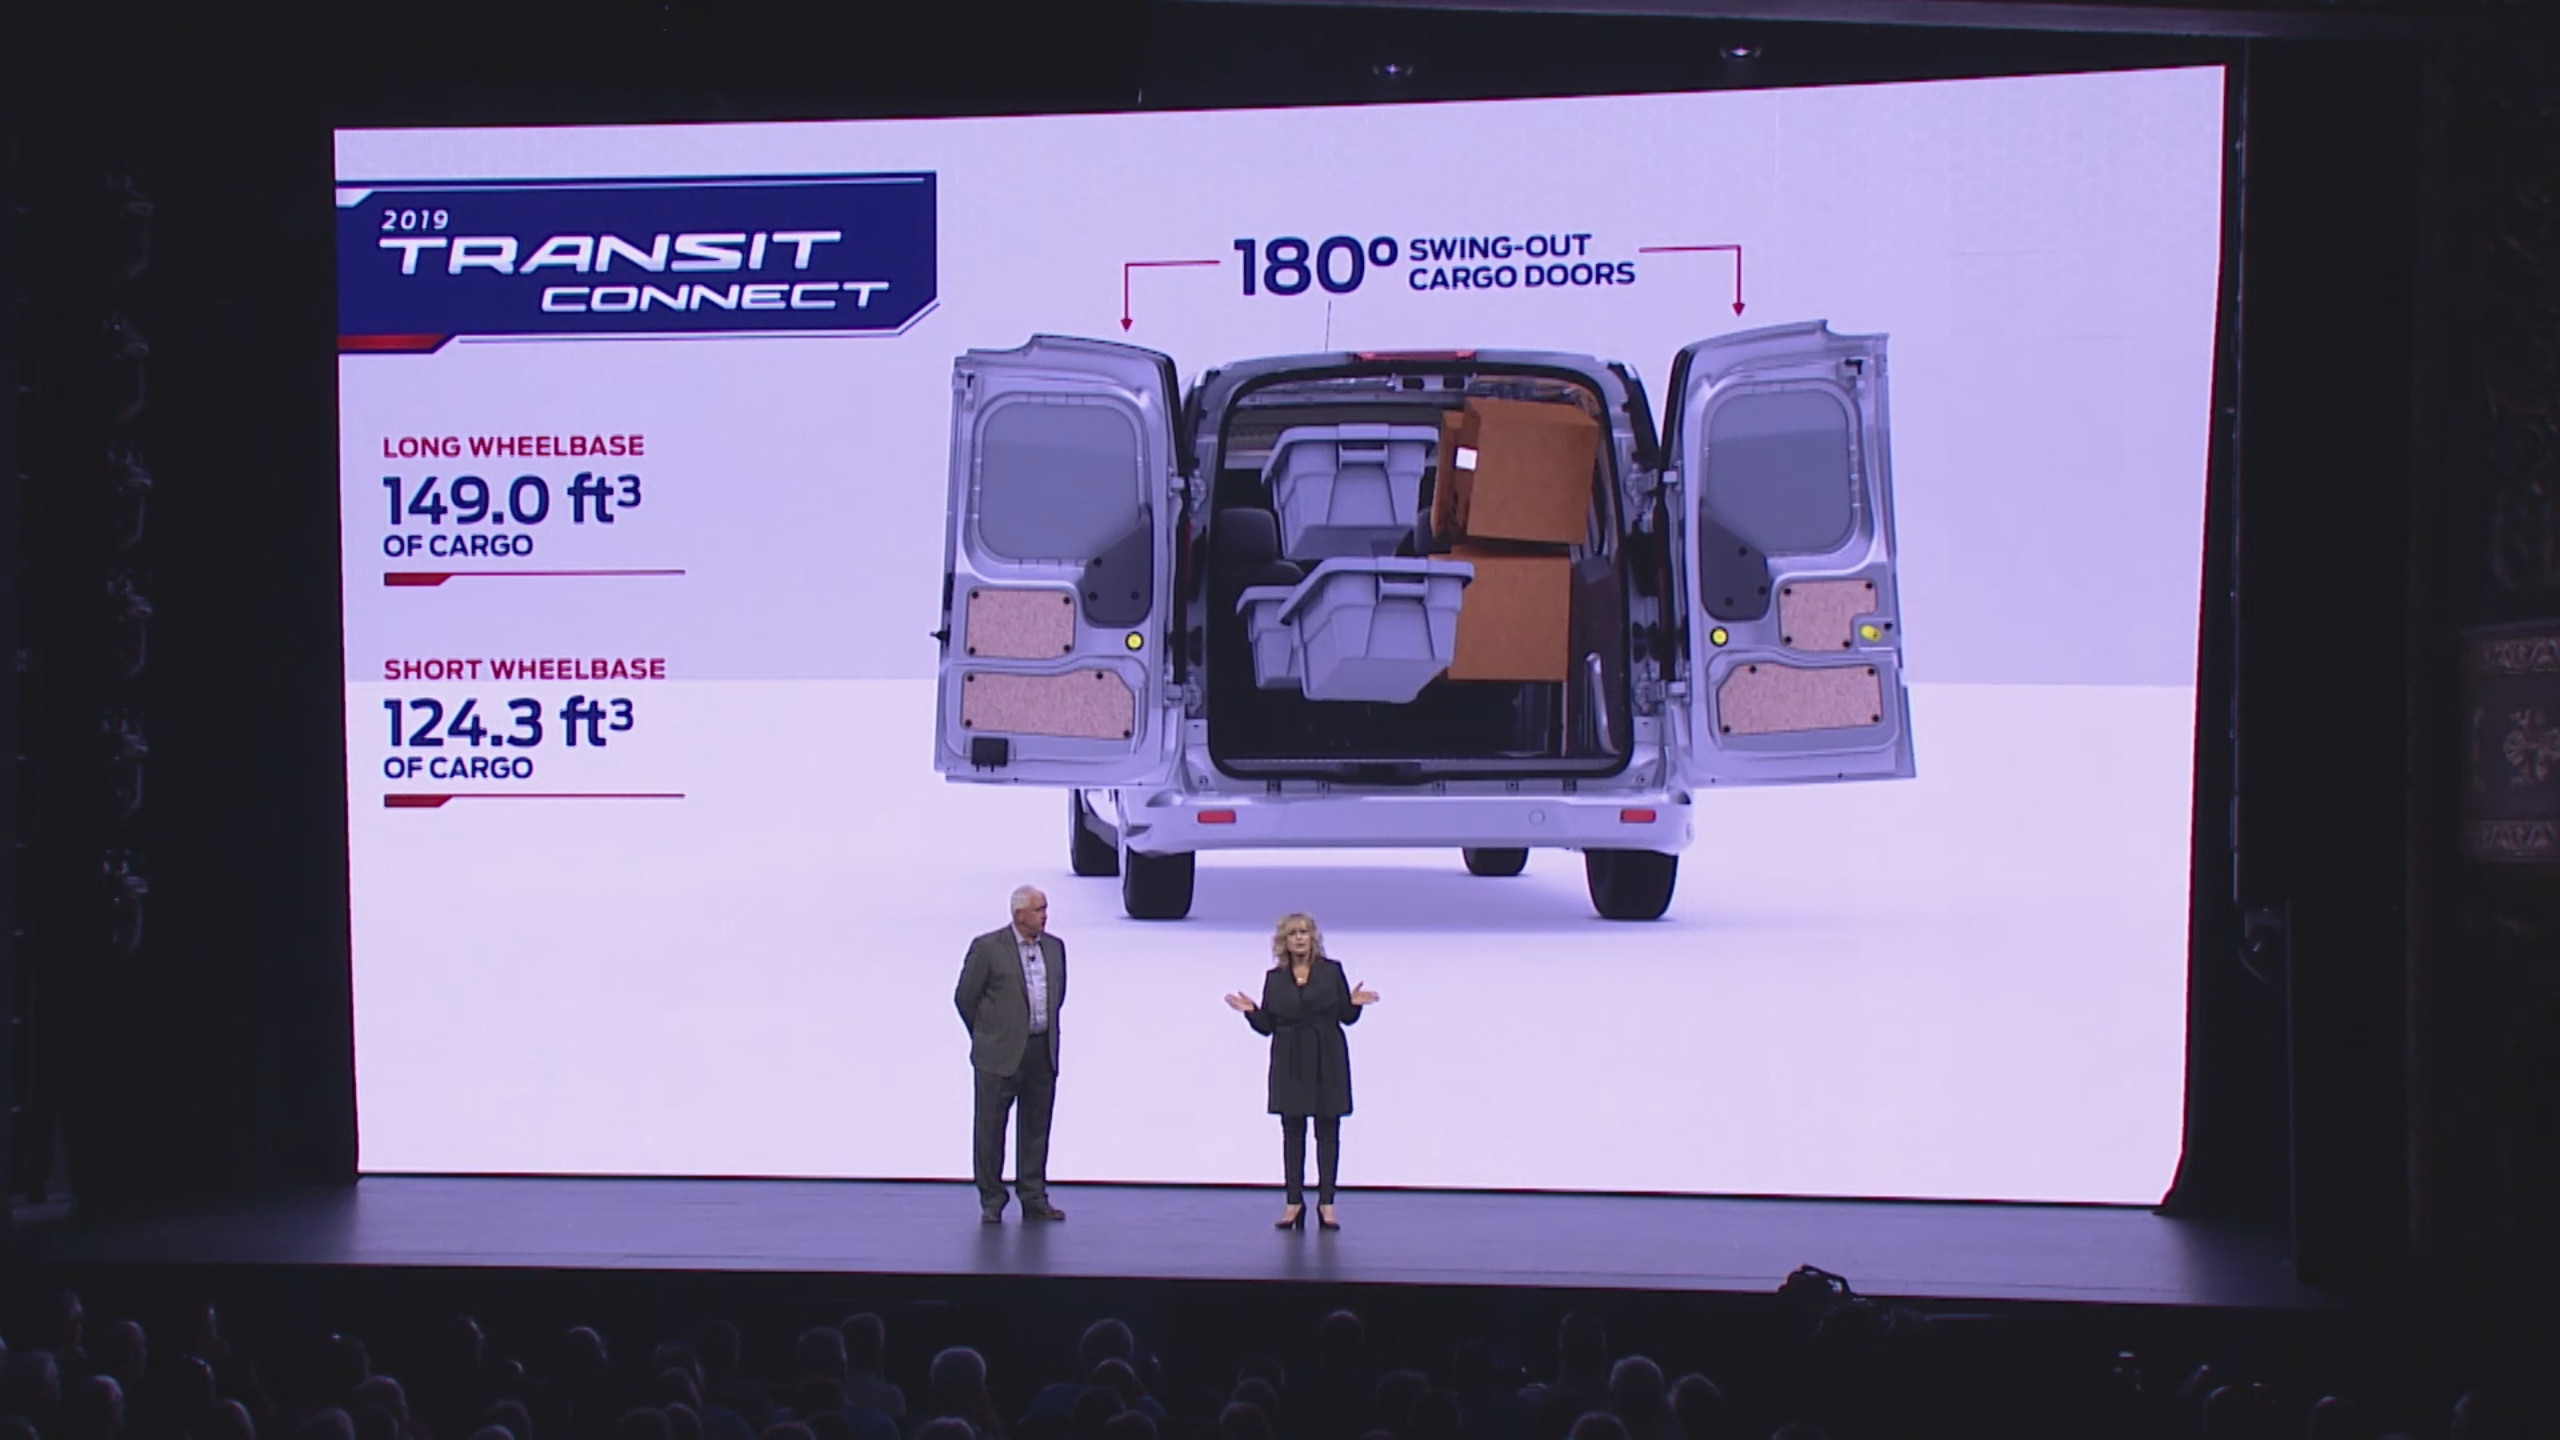 2019 Ford Transit Connect Live Presentation